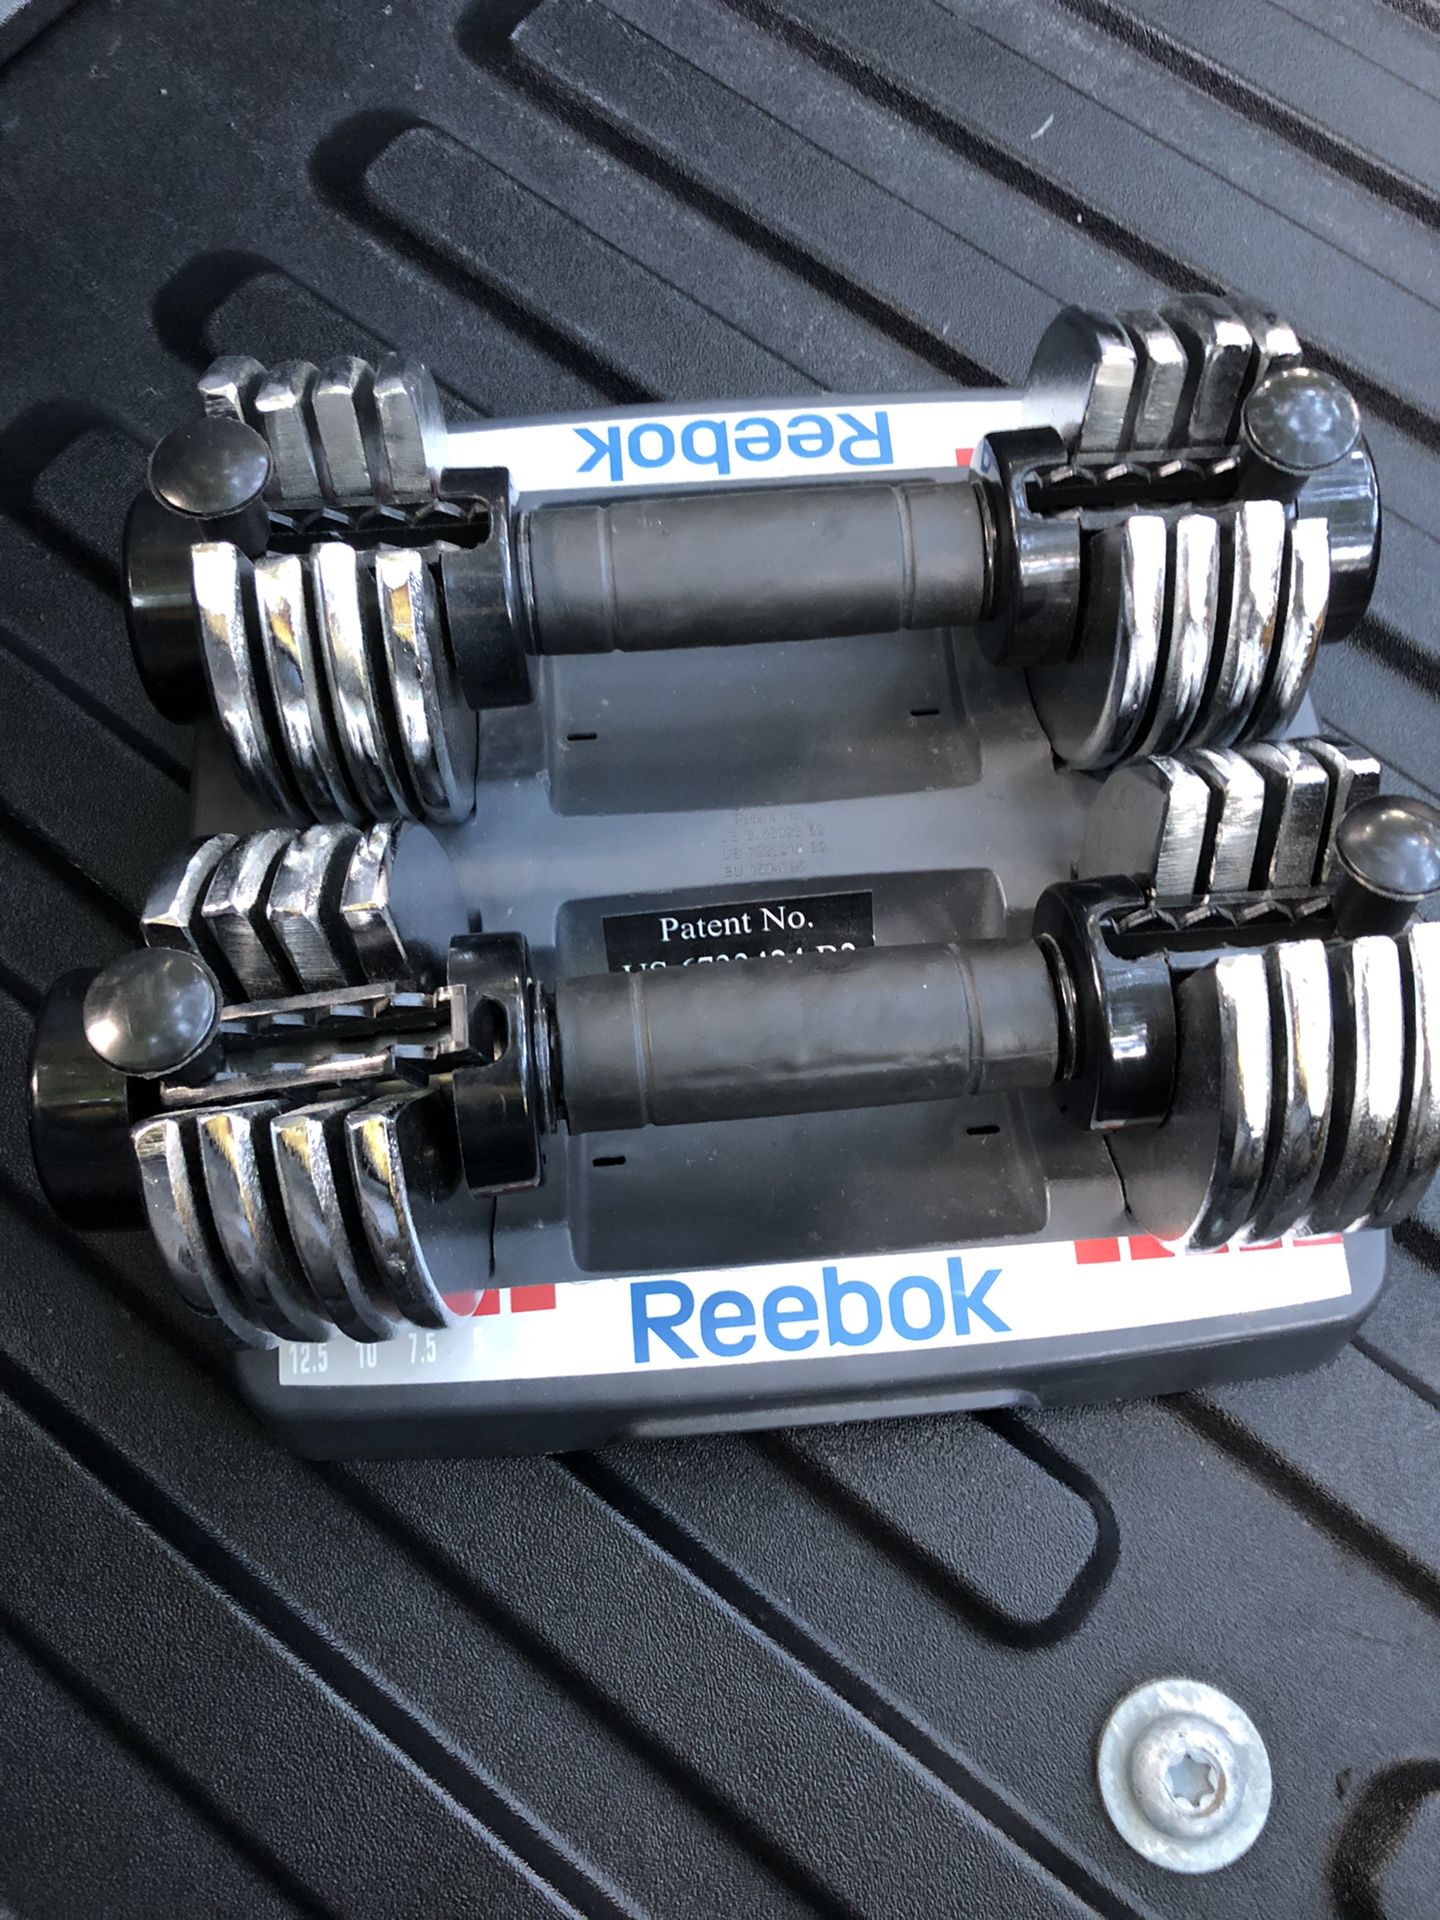 Reebok dumbbell weights